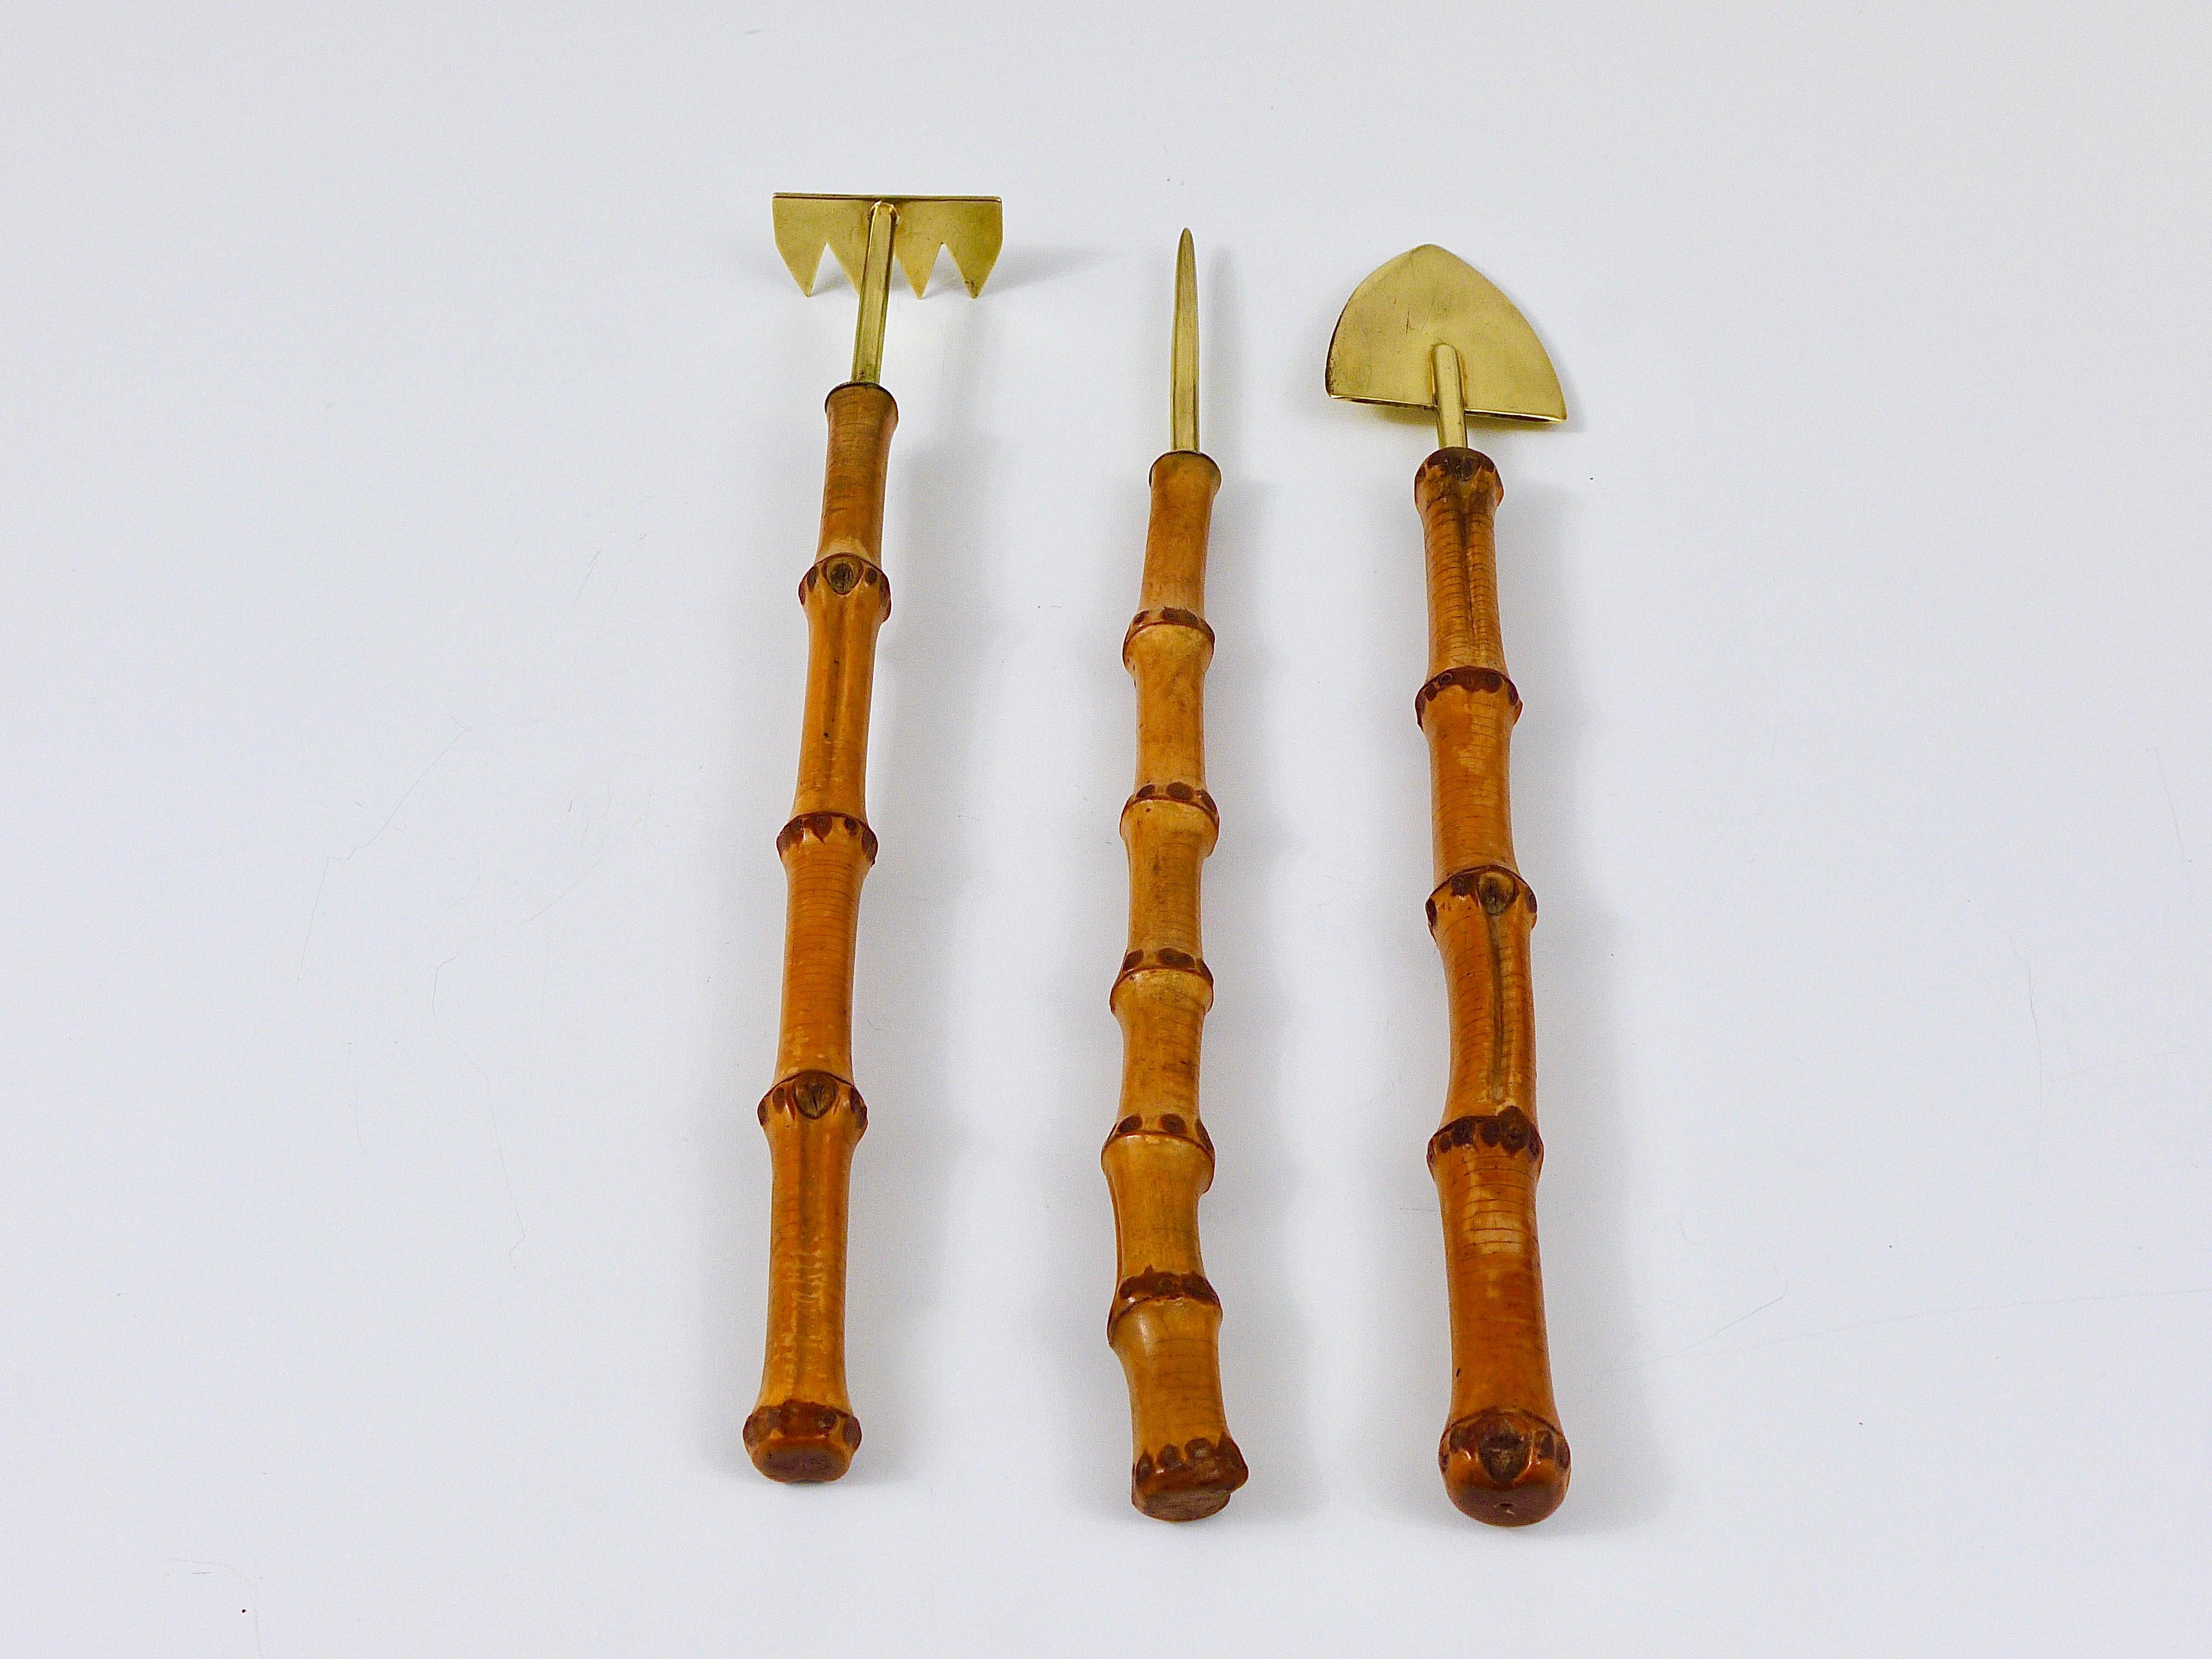 Austrian 1950s Midcentury Set of Urban Gardening Tools, Brass and Bamboo, Austria, 1950s